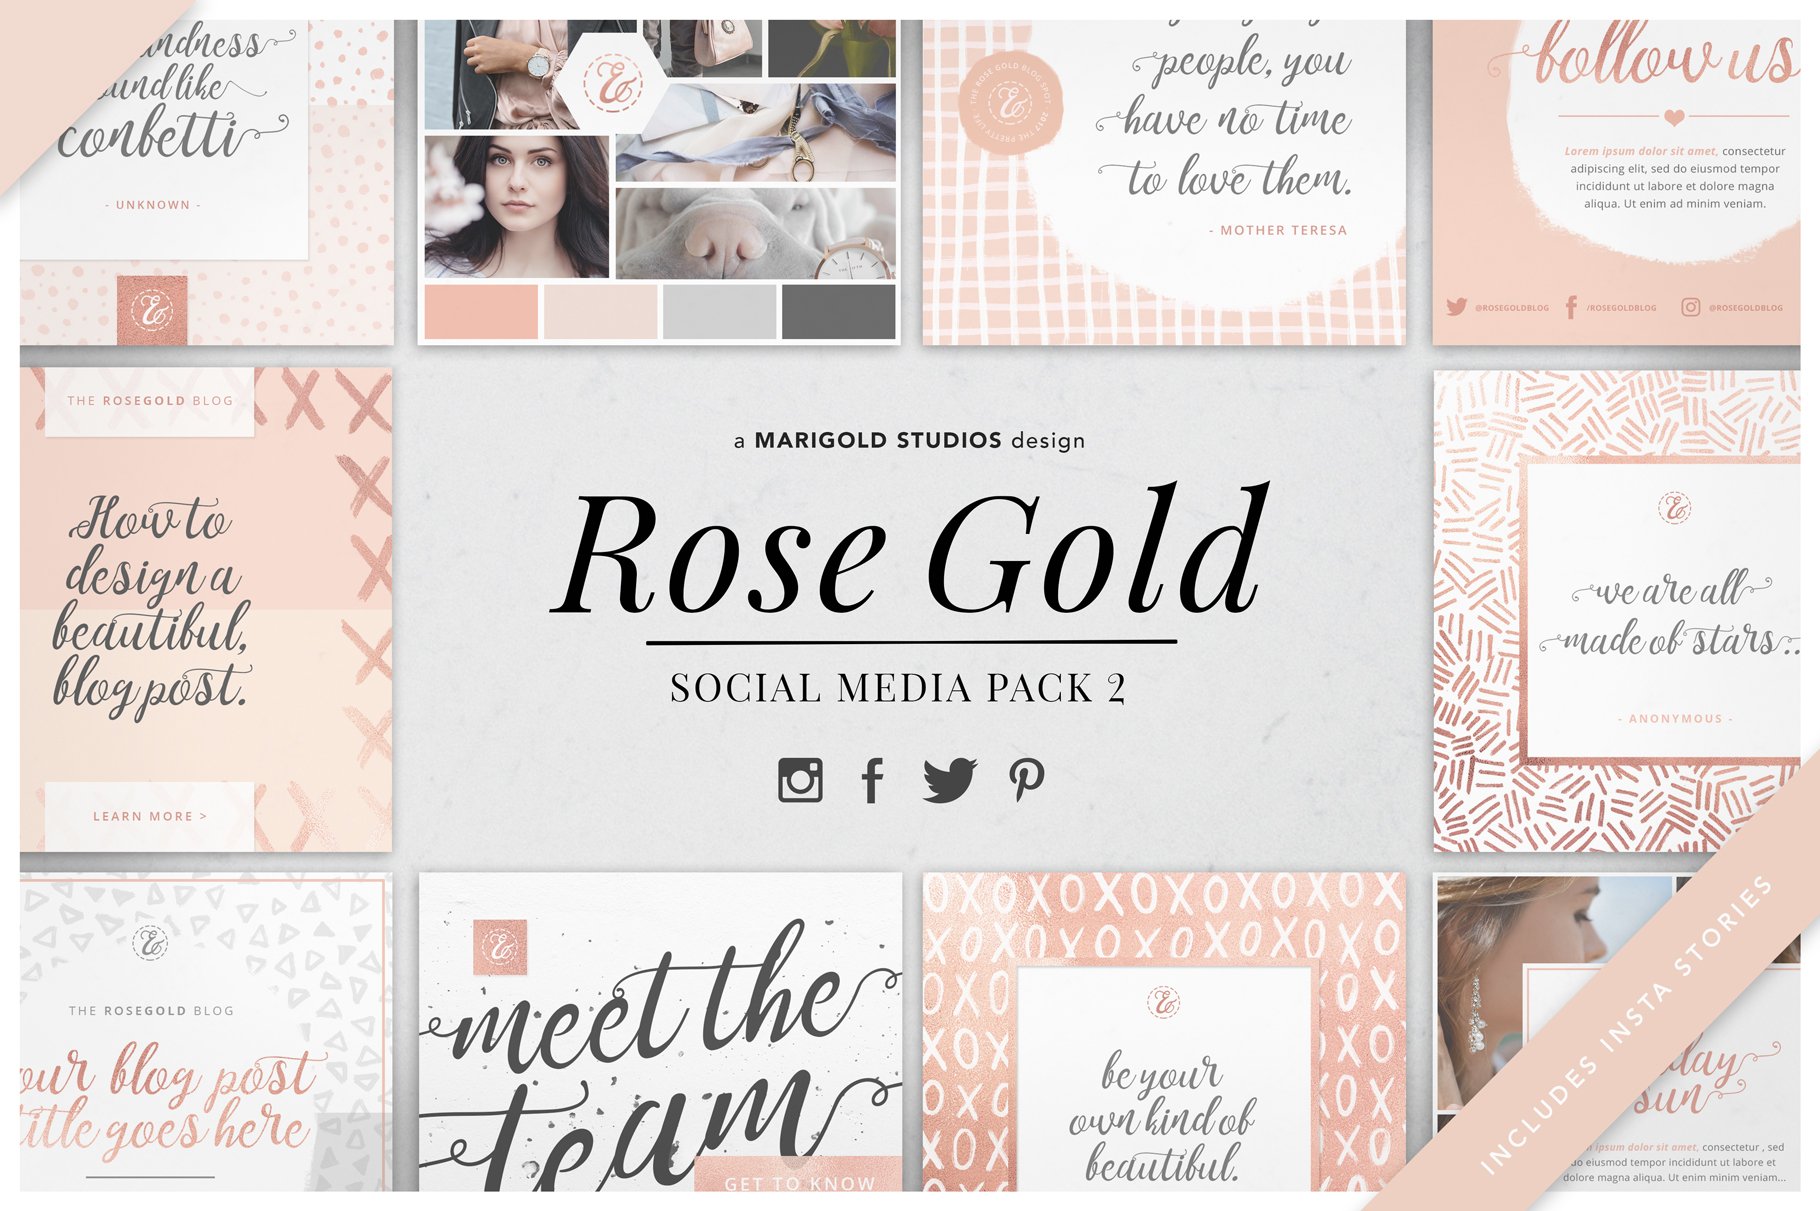 ROSE GOLD | Social Media Pack 2 cover image.